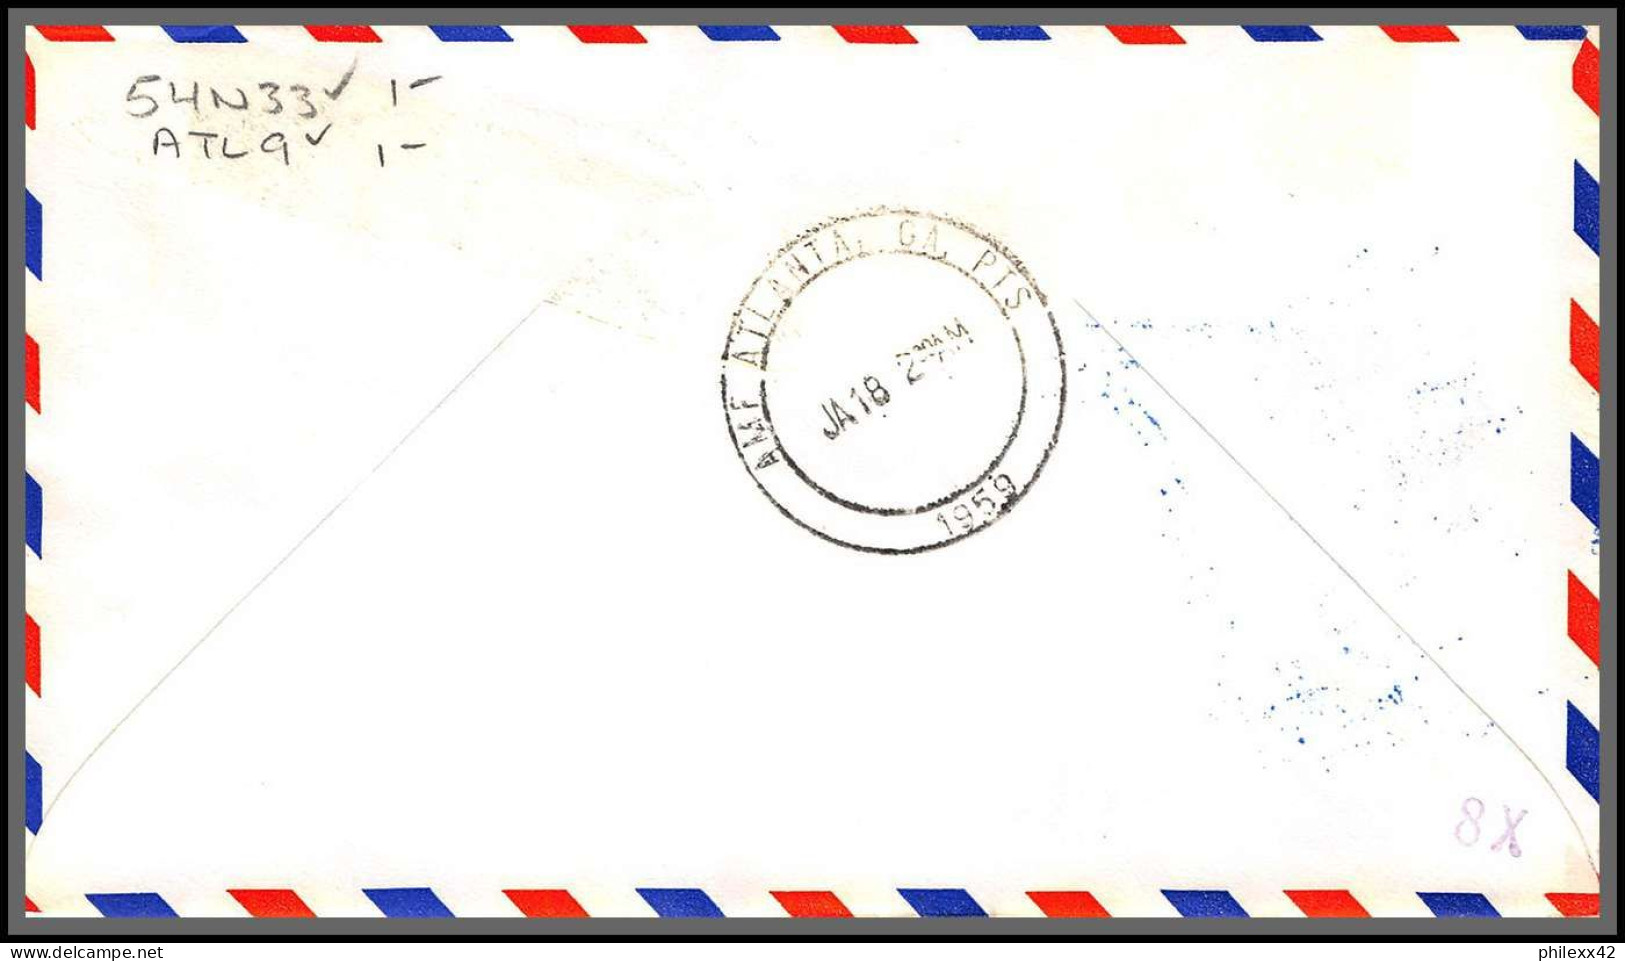 12330 am 14 extension lot de 6 tampa jacksonville miami orlando janvier 1959 premier vol first flight lettre airmail